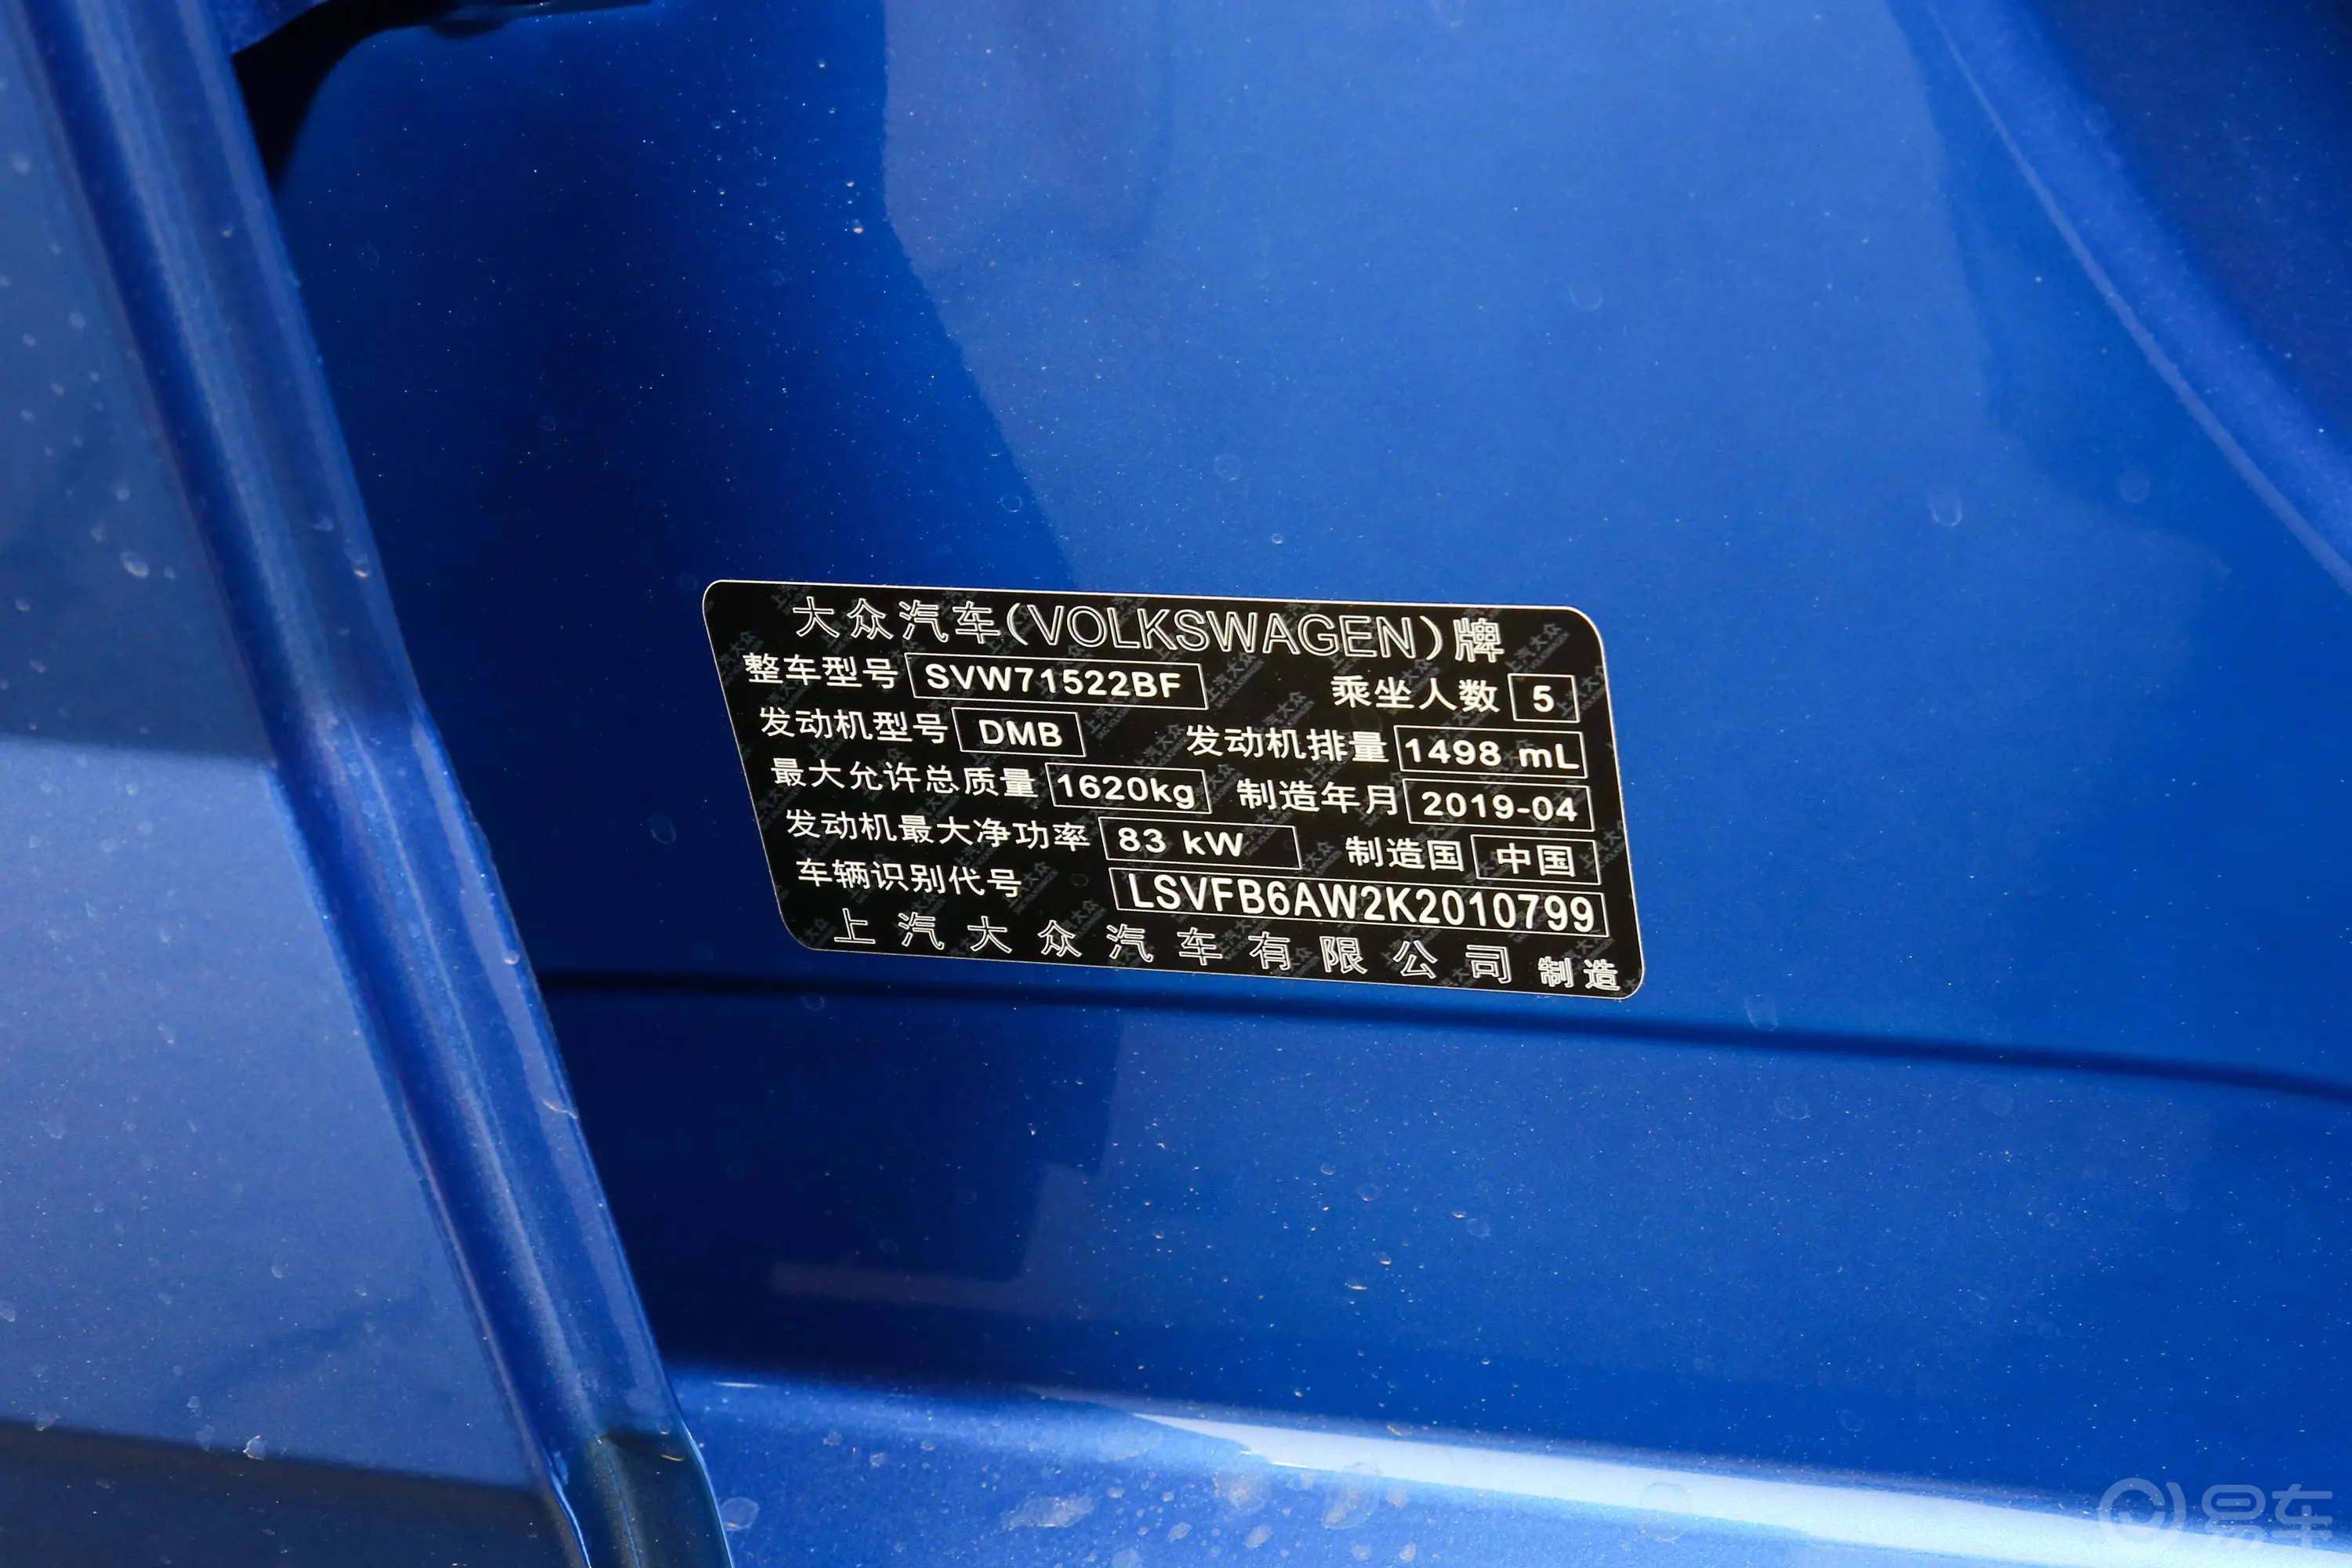 PoloPlus 1.5L 手自一体 炫彩科技版车辆信息铭牌